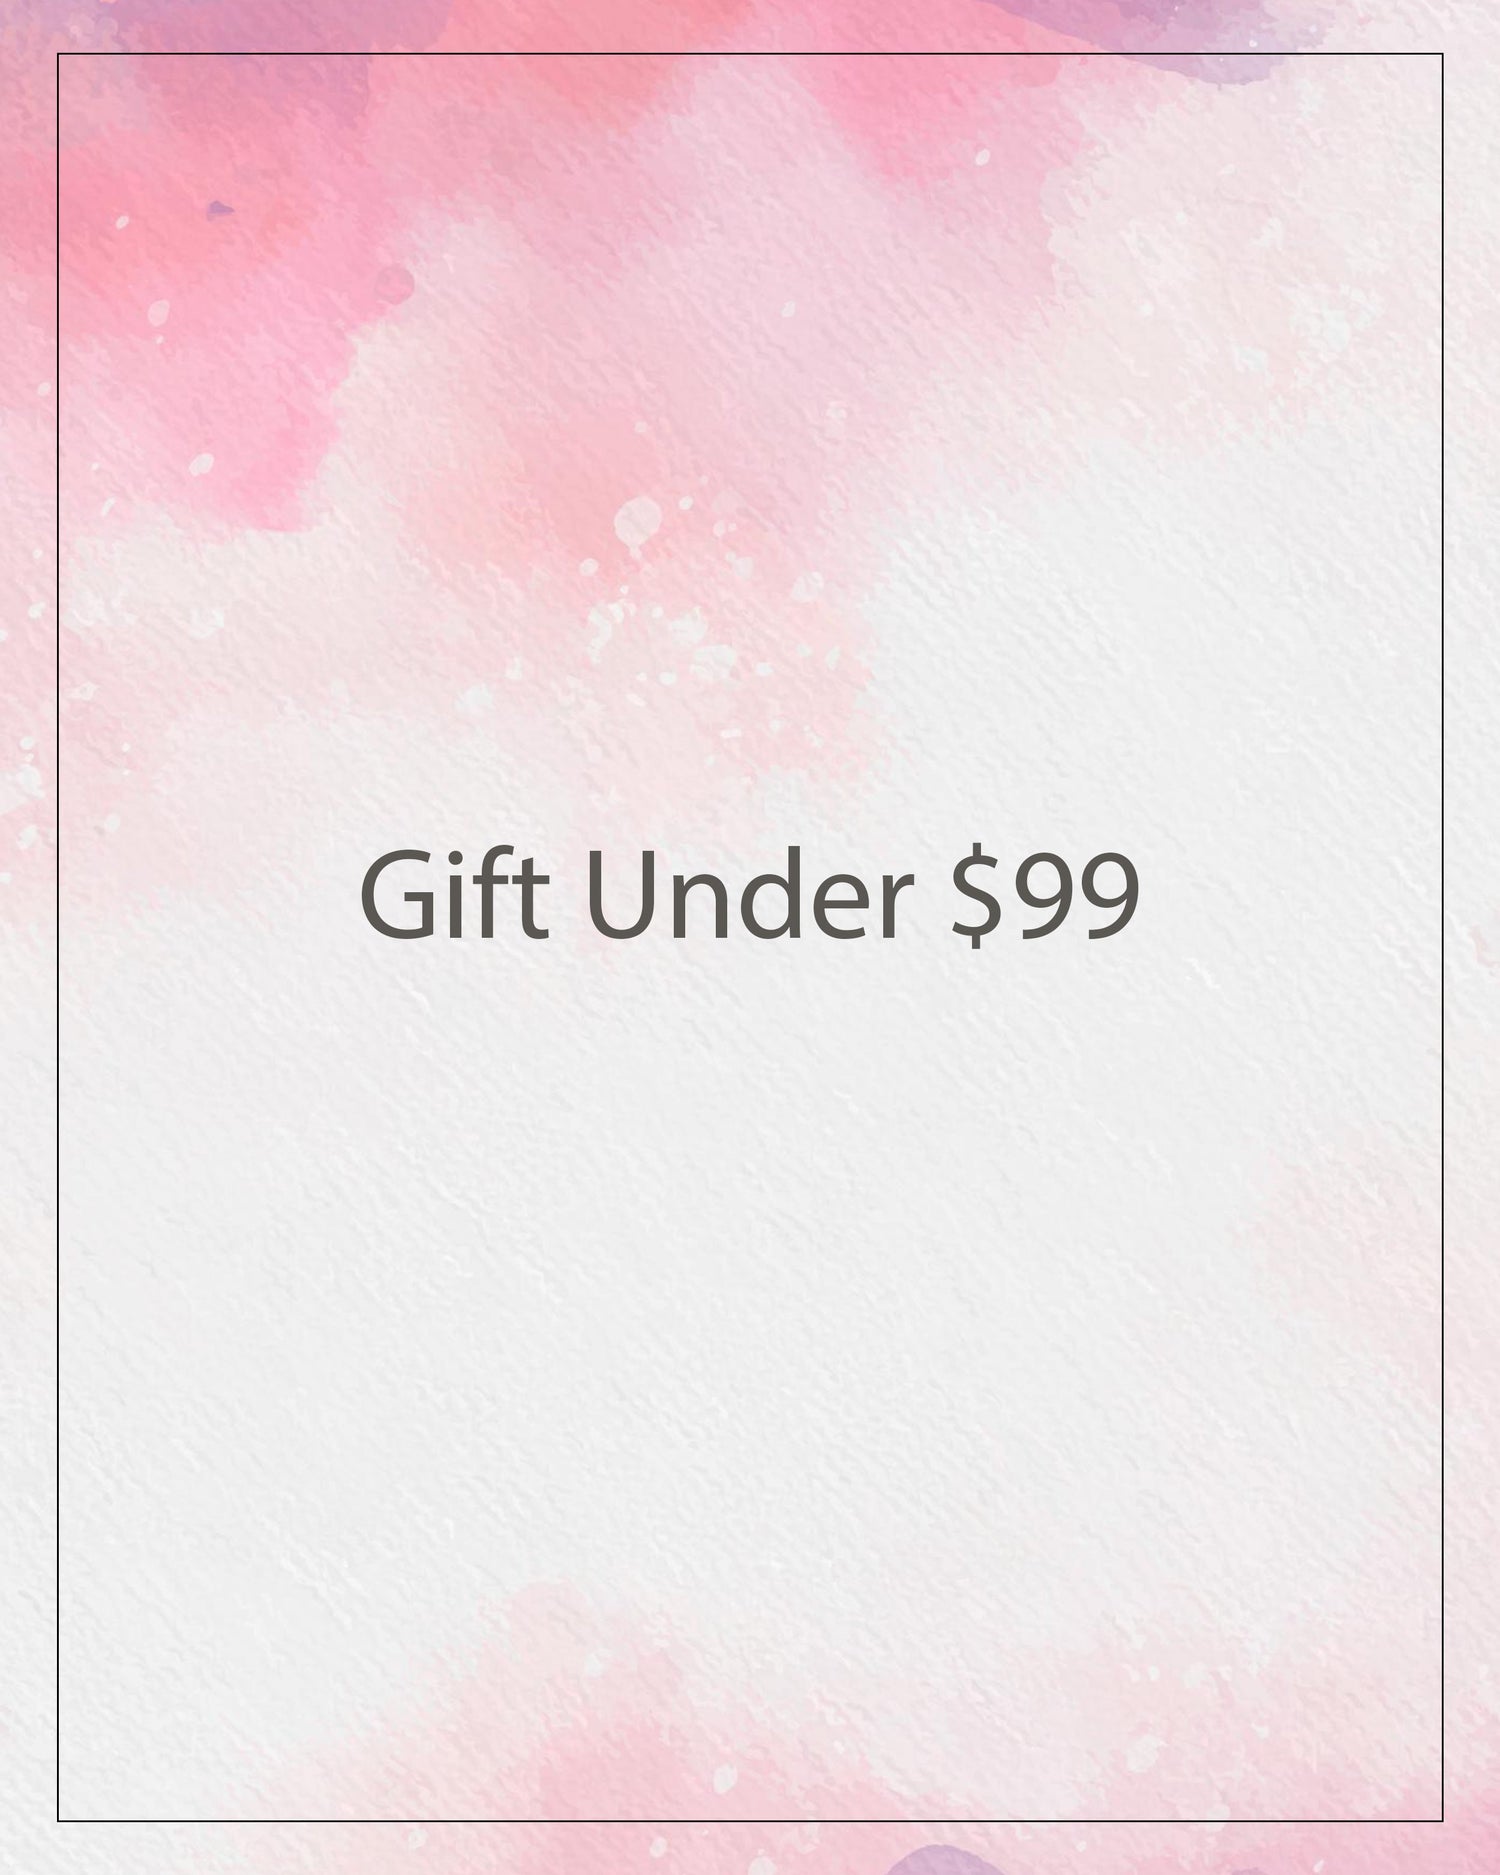 Gifts Under $99